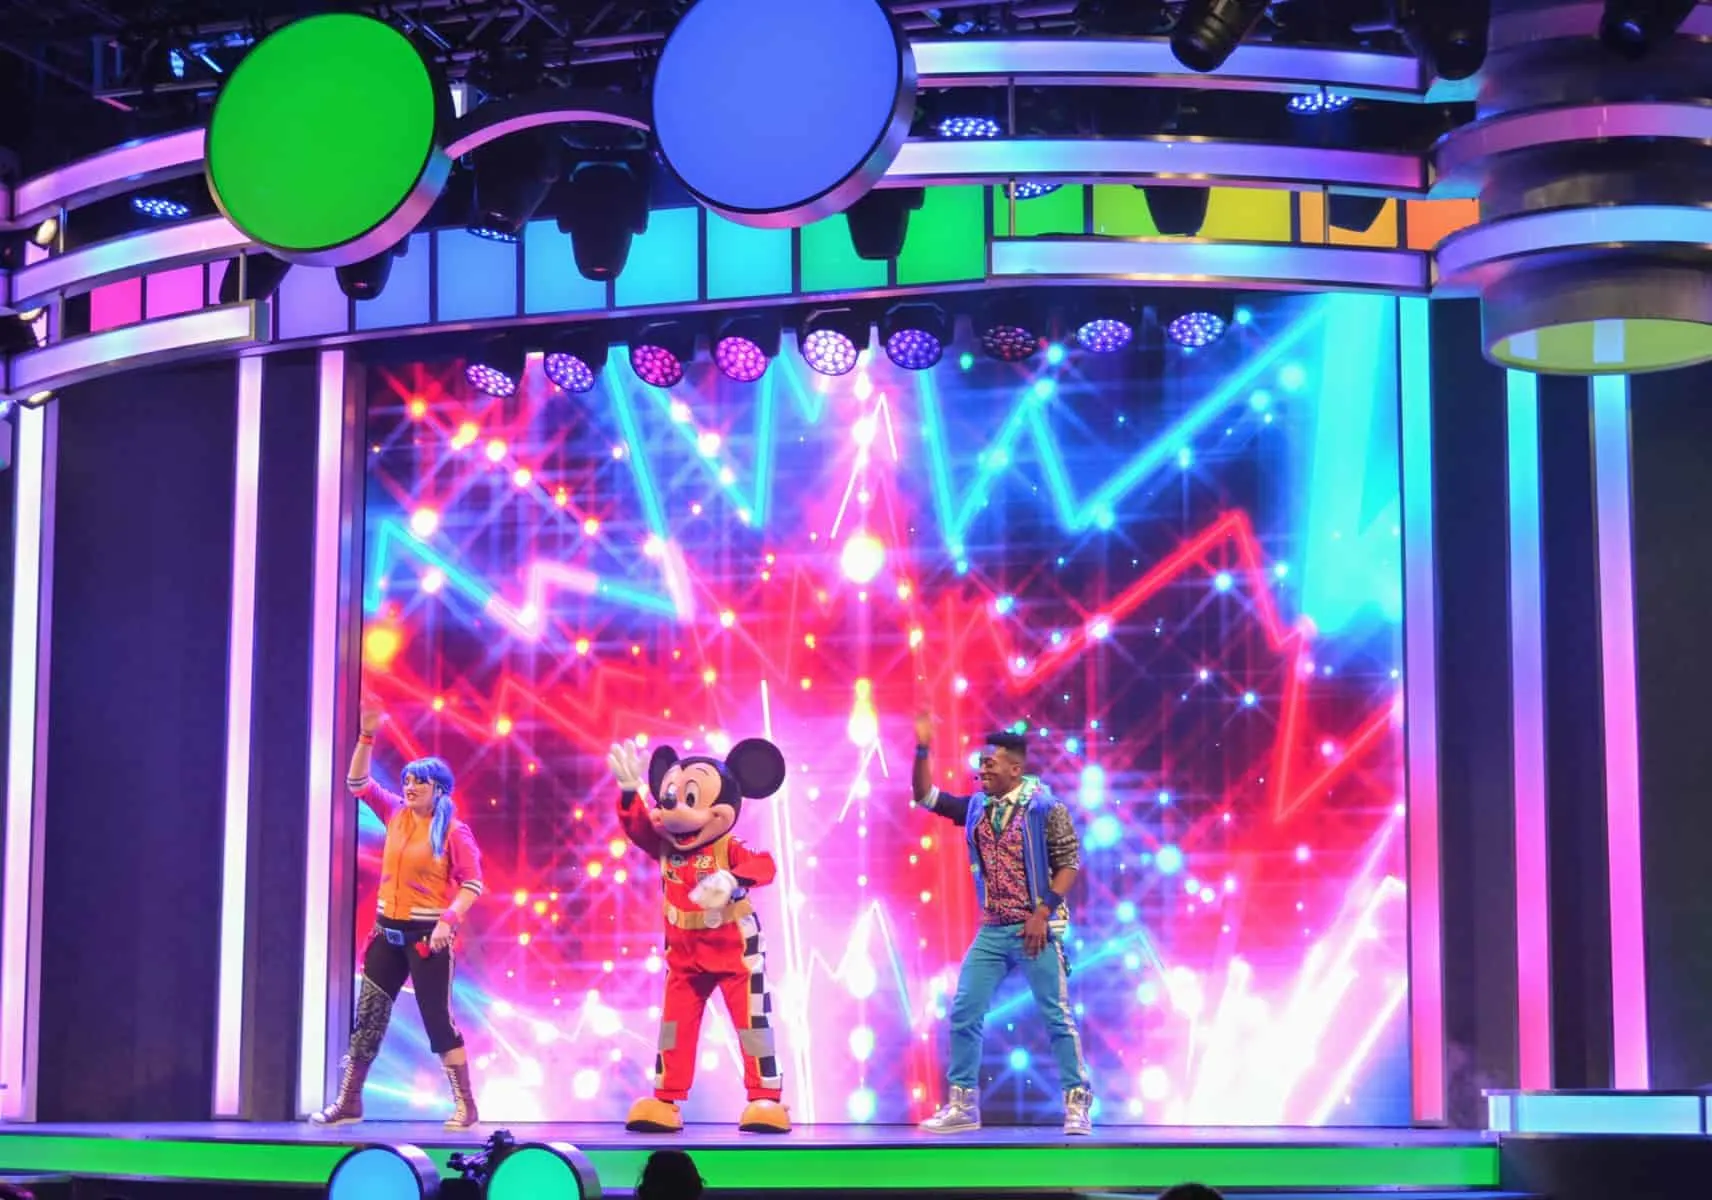 Disney Junior Dance Party!